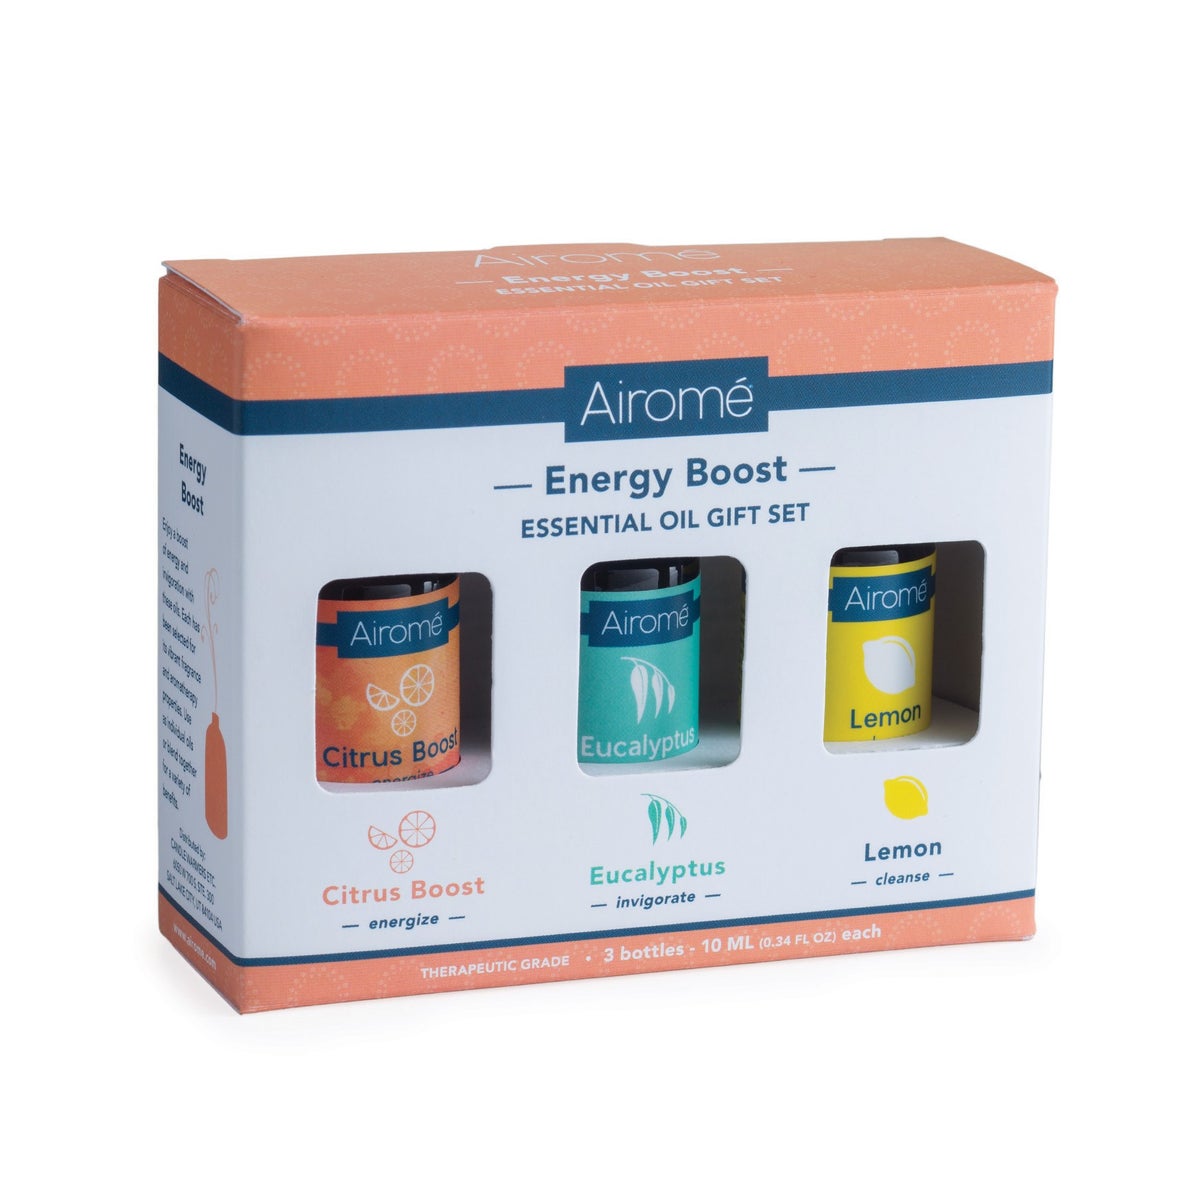 Essential Oils Gift Set - Energy Boost - Includes 10 ml Citrus Boost, Eucalyptus and Lemon